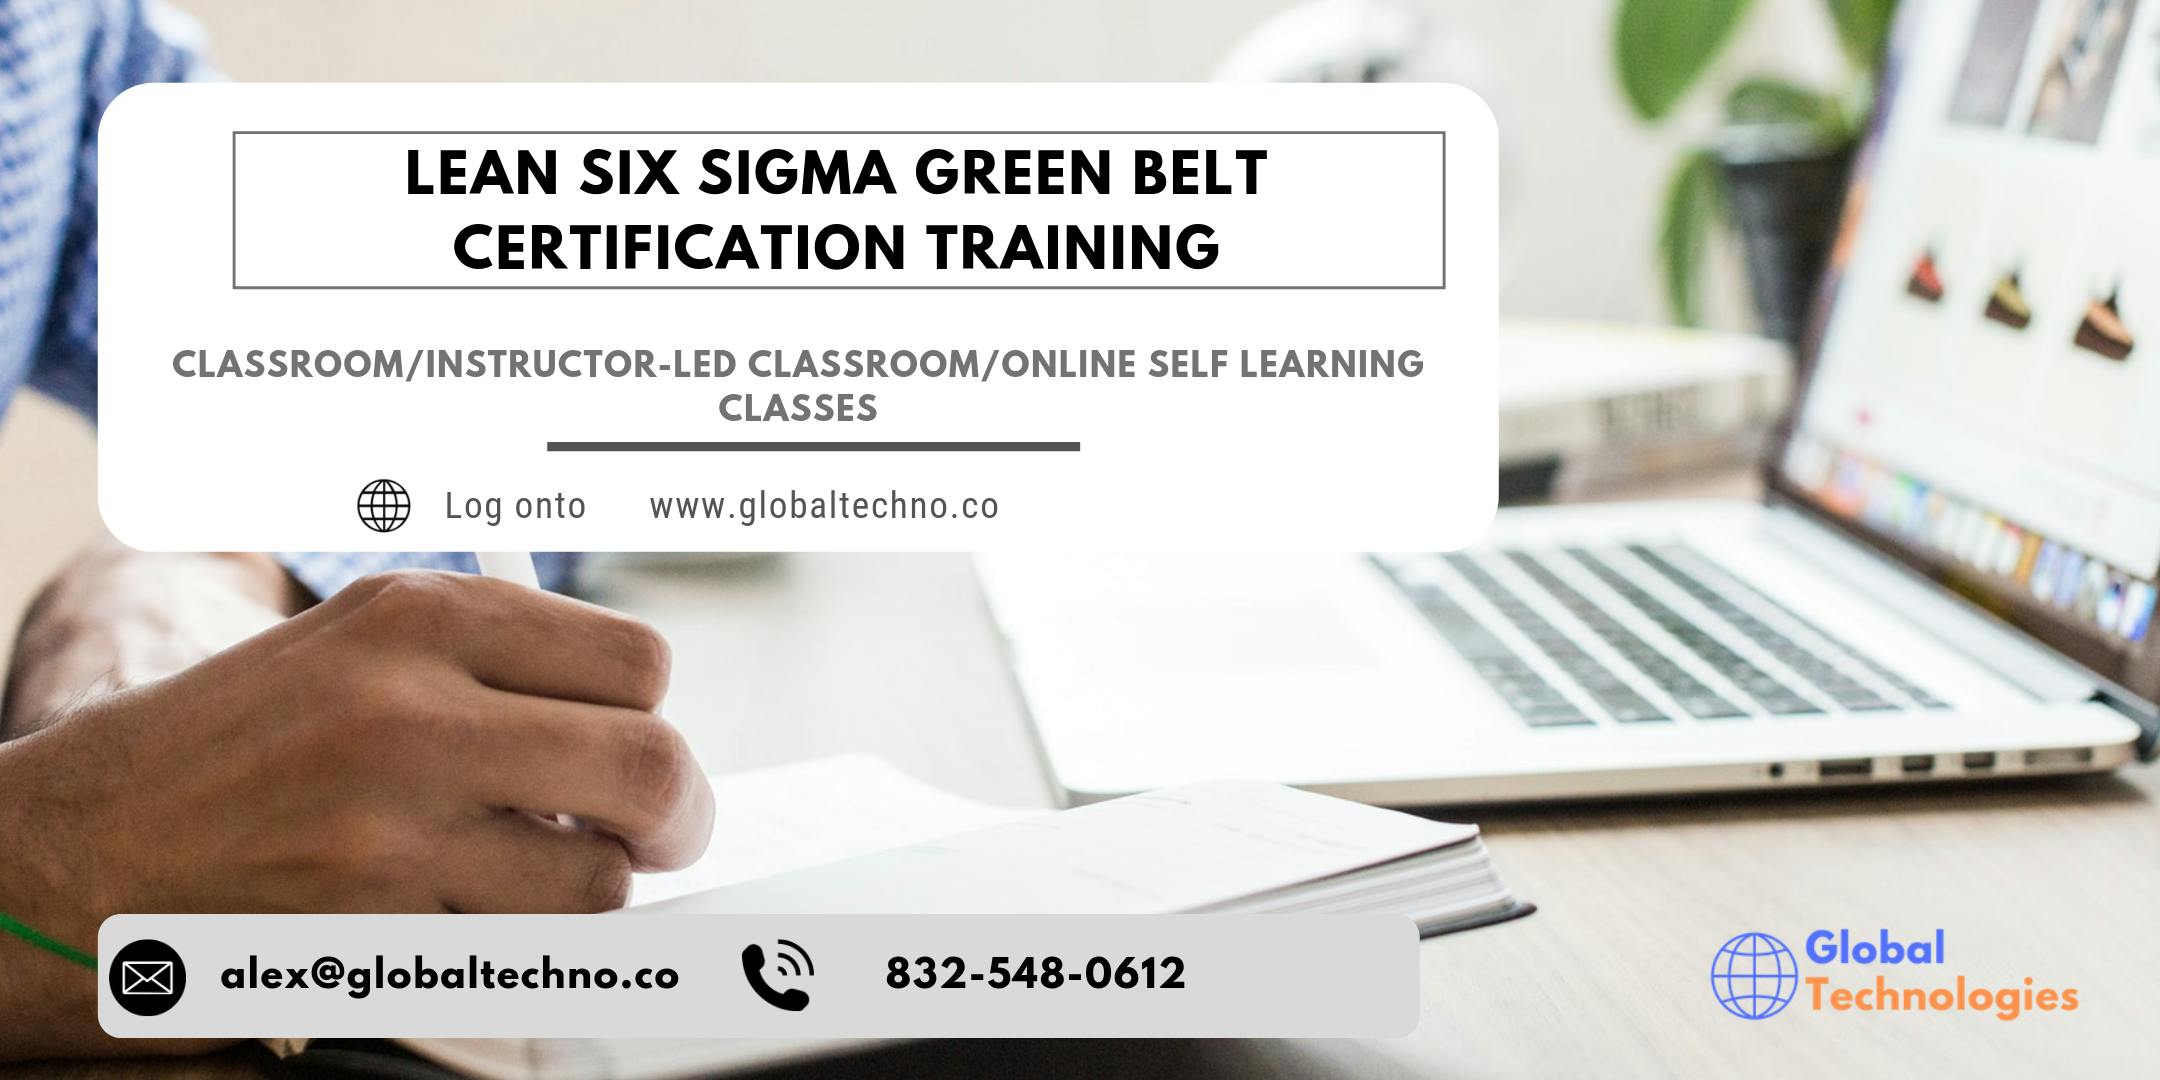 Lean Six Sigma Green Belt (LSSGB) Certification Training in Fresno, CA